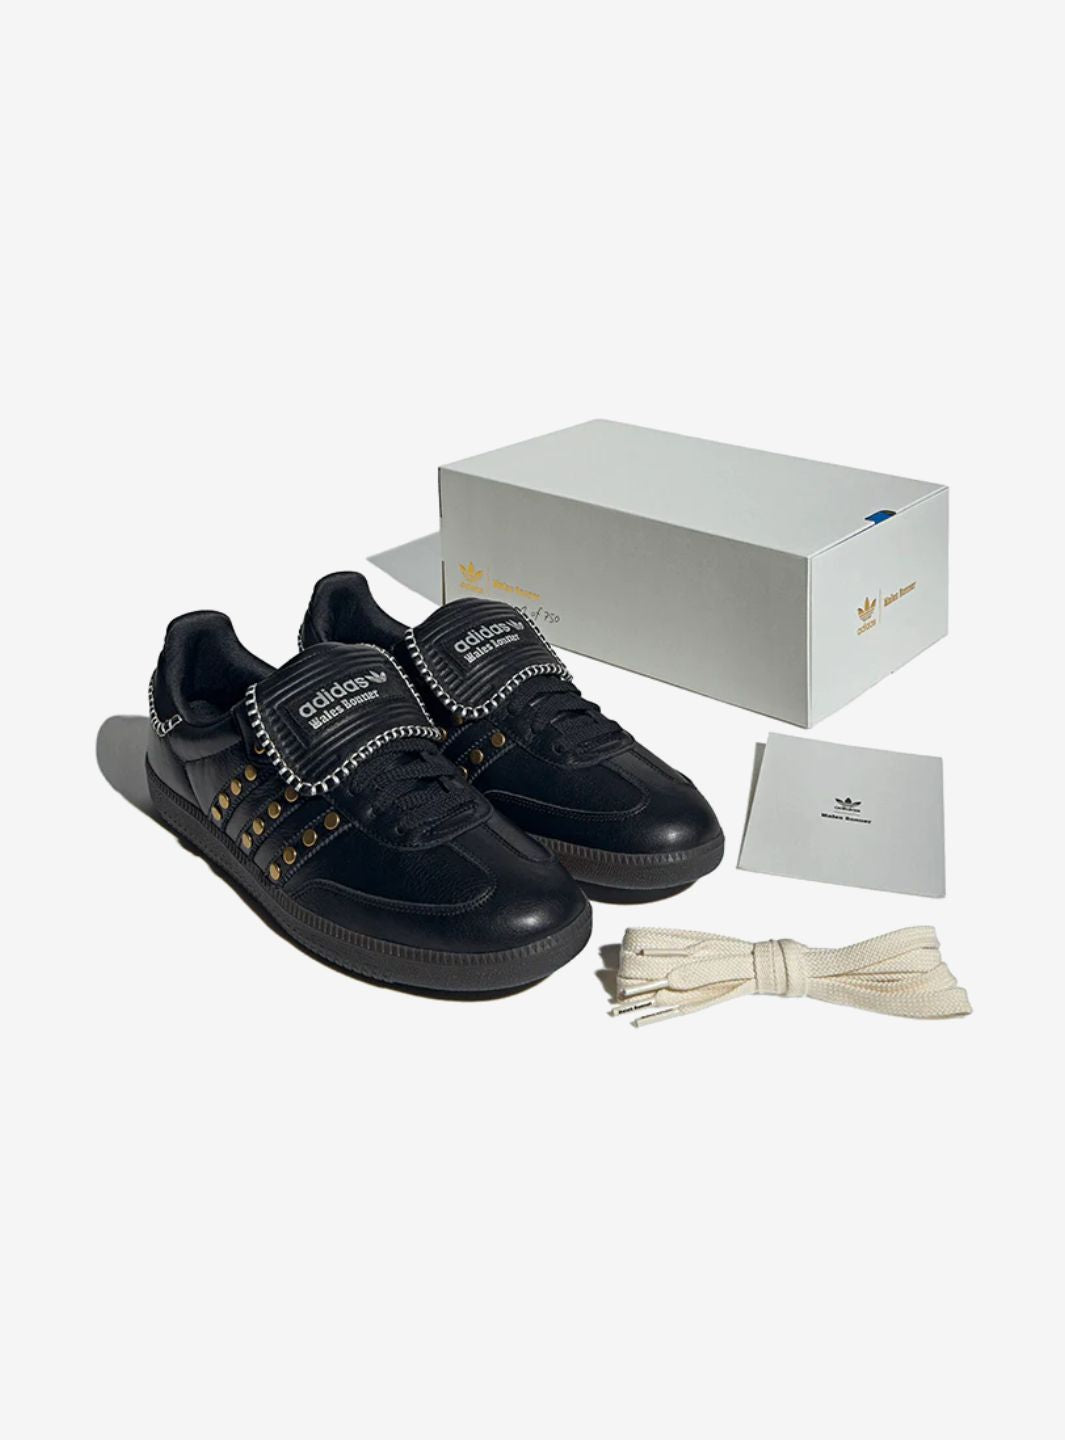 Adidas Samba Wales Bonner Studded Pack Black - IG4303 | ResellZone